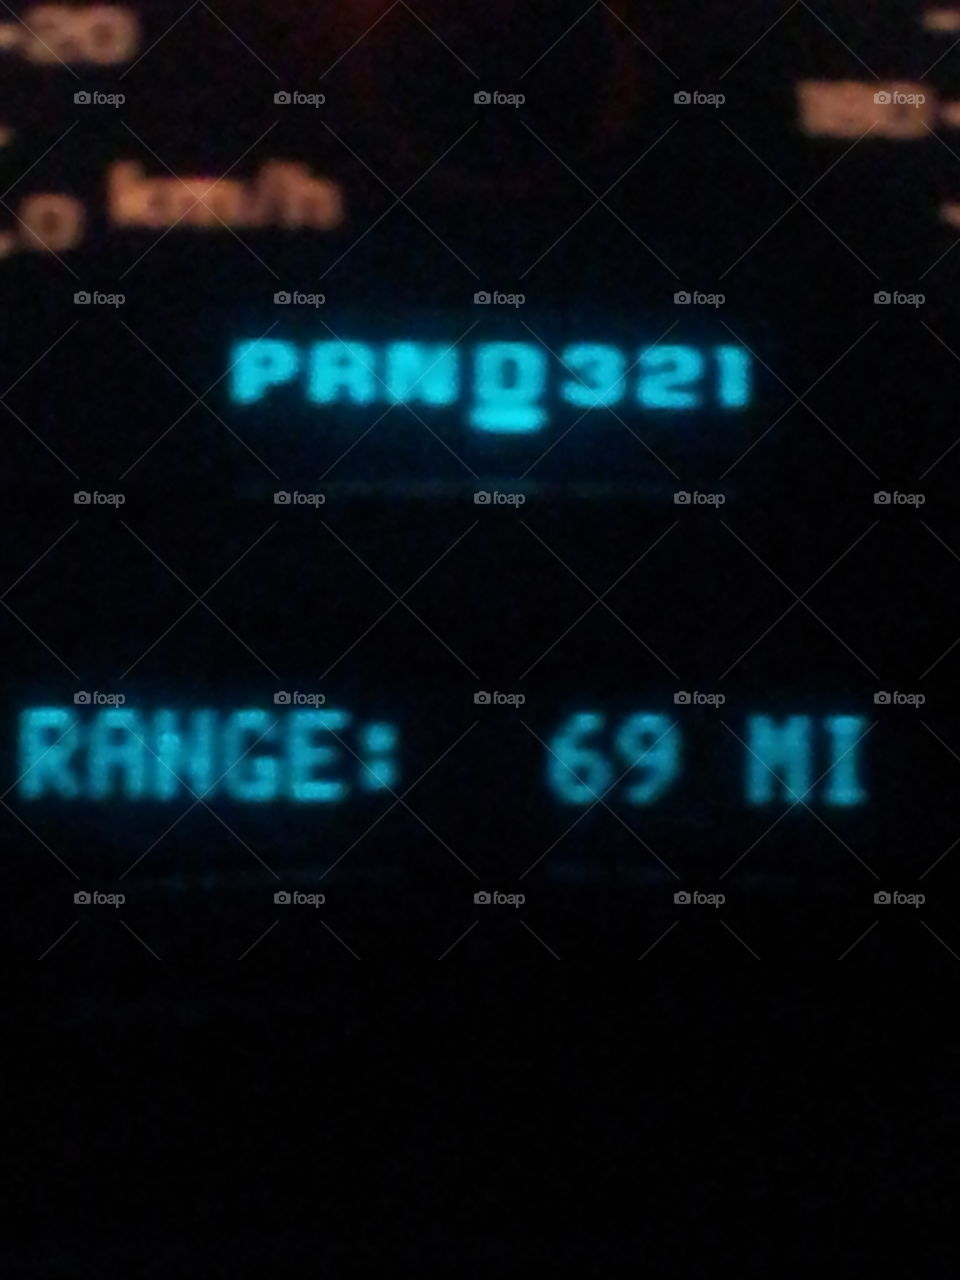 Range 69 gas mileage